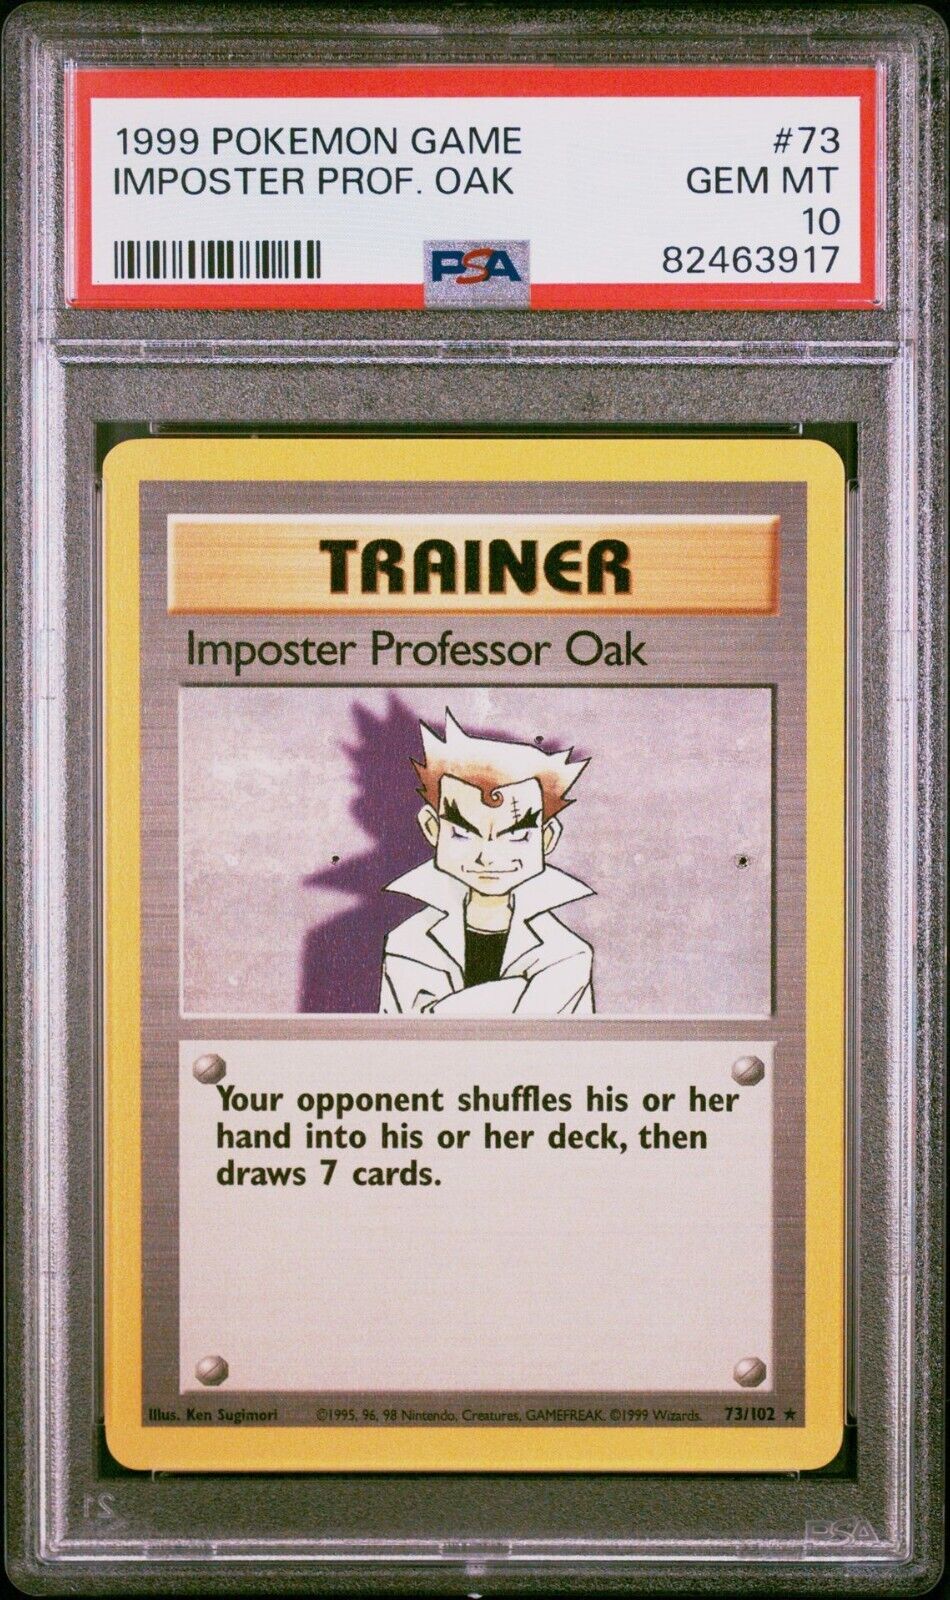 1999 Pokemon Base Set Imposter Professor Oak 73/102 - PSA 10